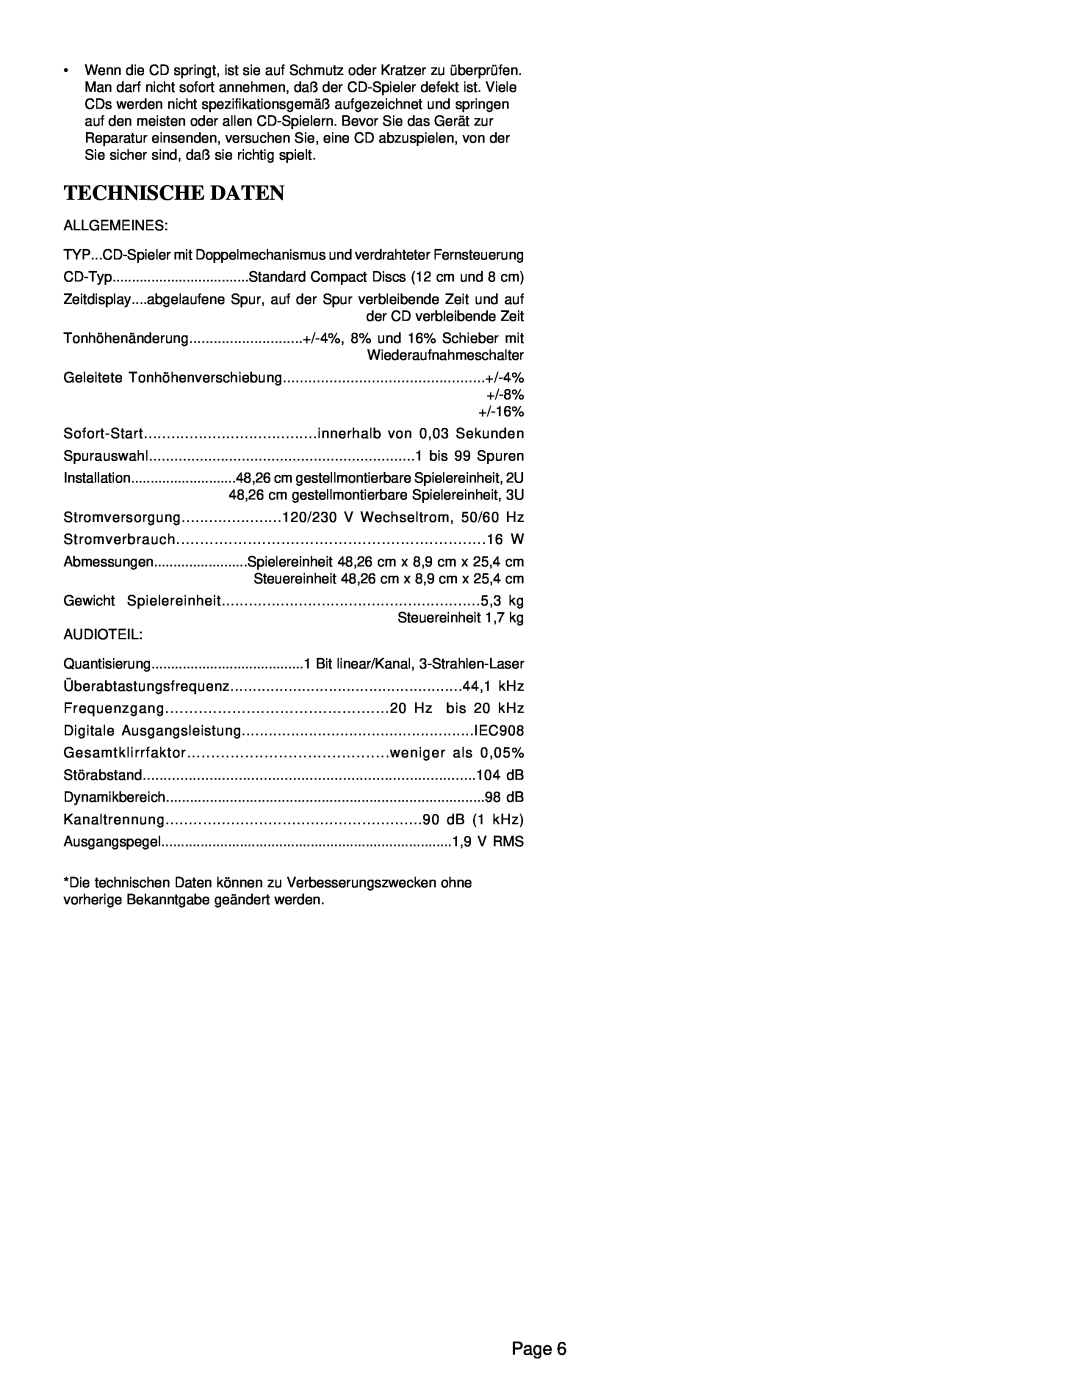 Gemini CD-9800 manual Technische Daten, Page 